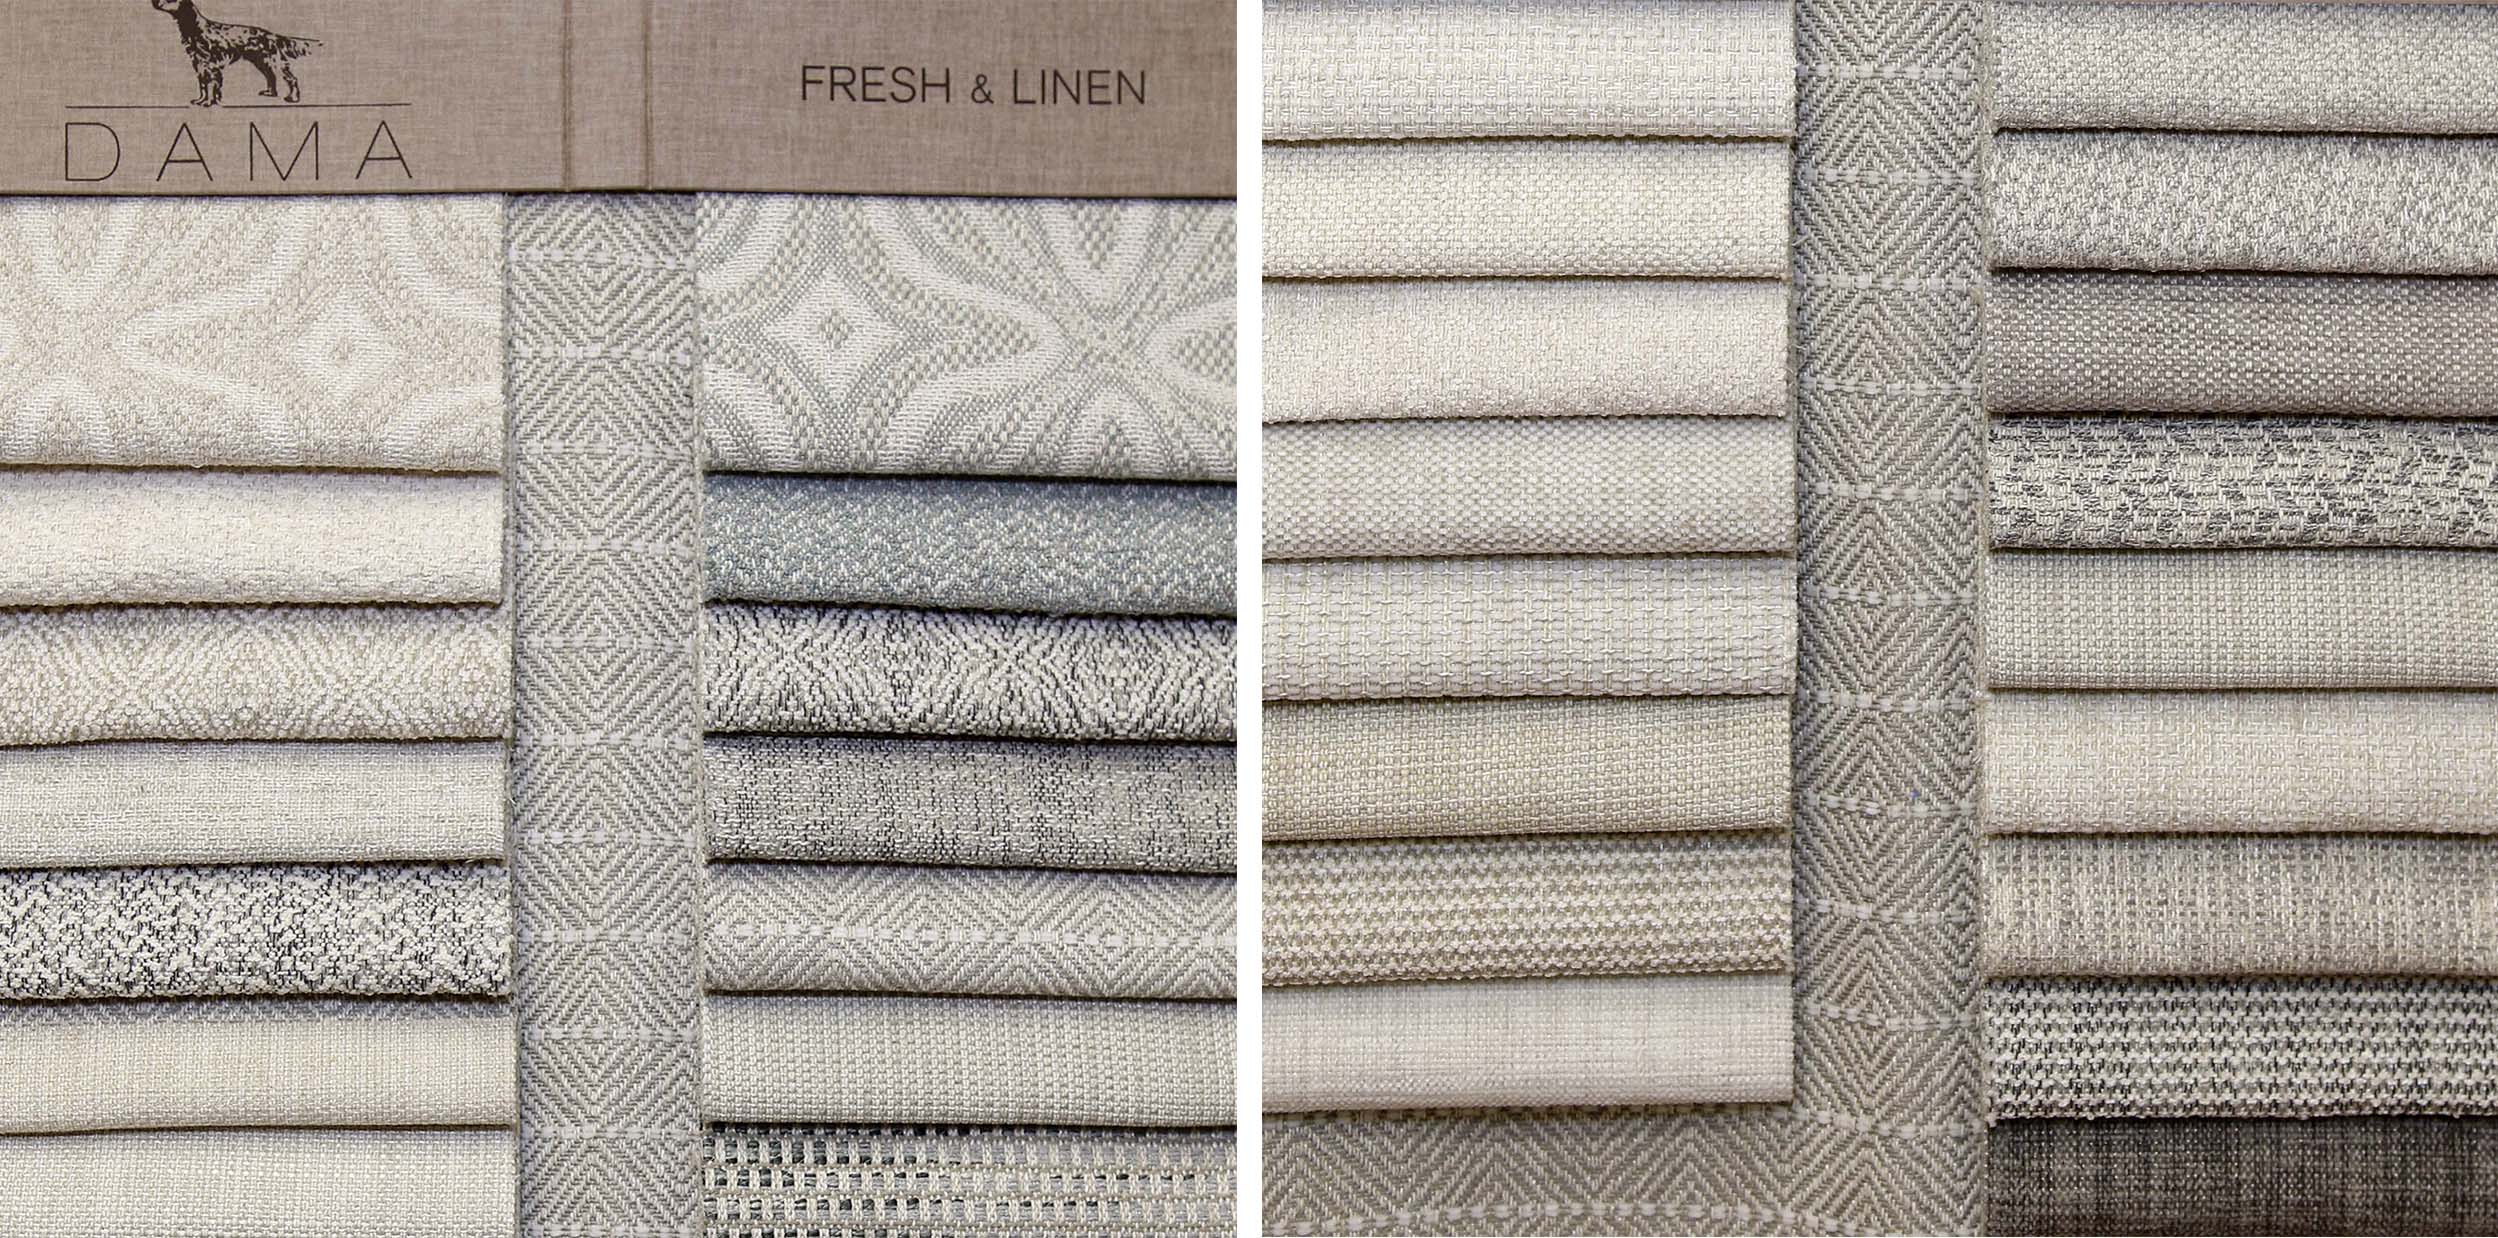 Percha Fresh & Linen